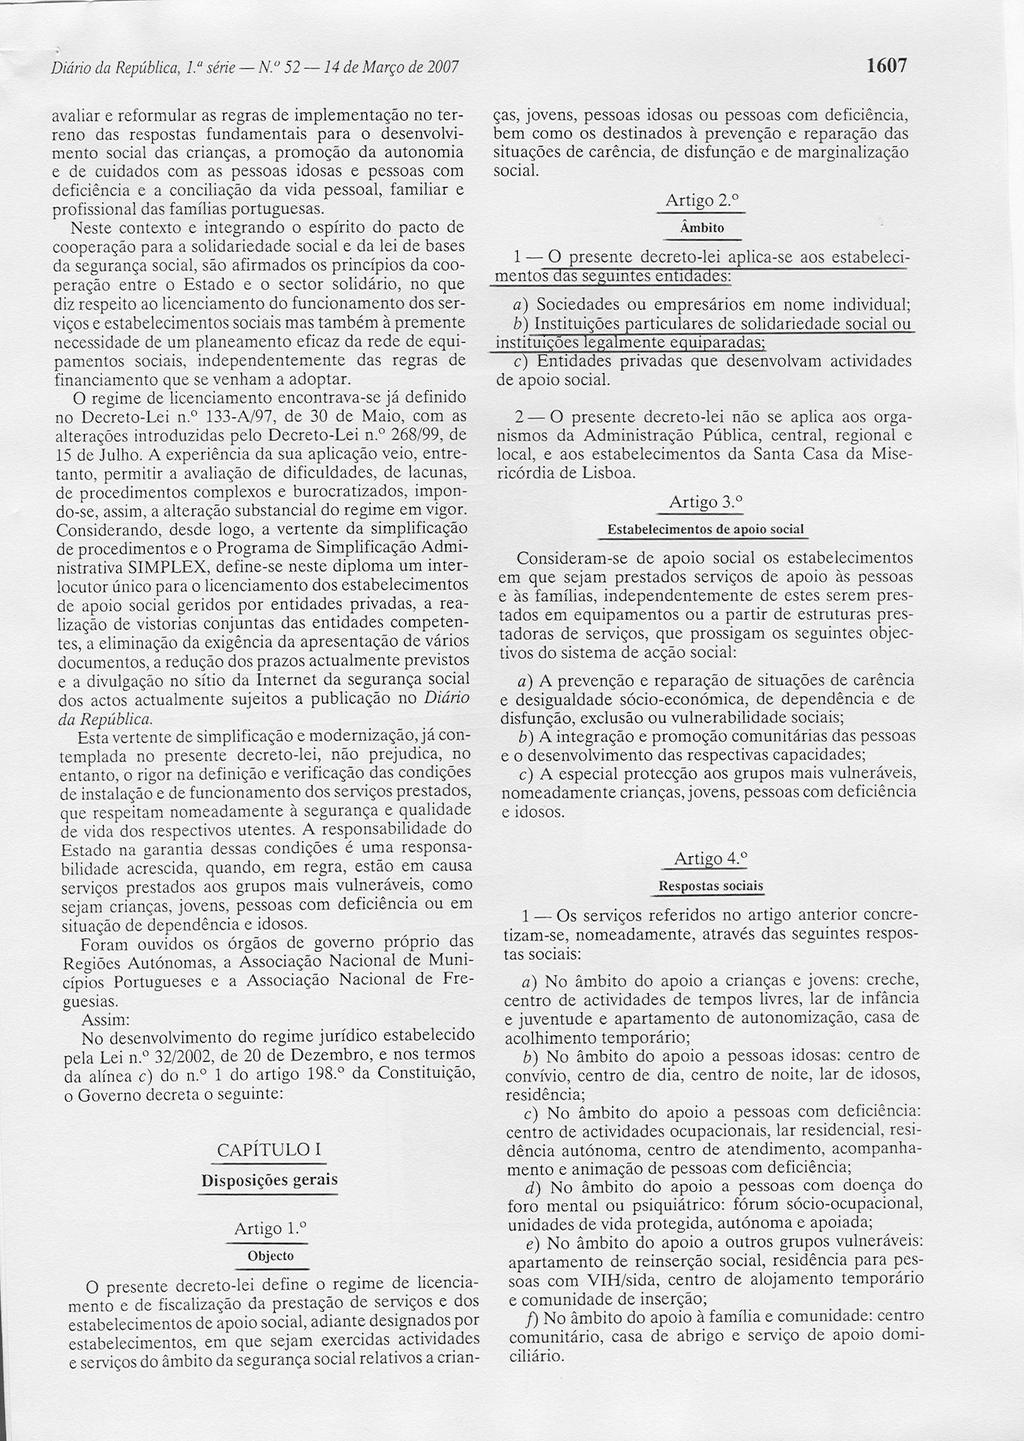 Anexo 2 - Decreto-Lei n.